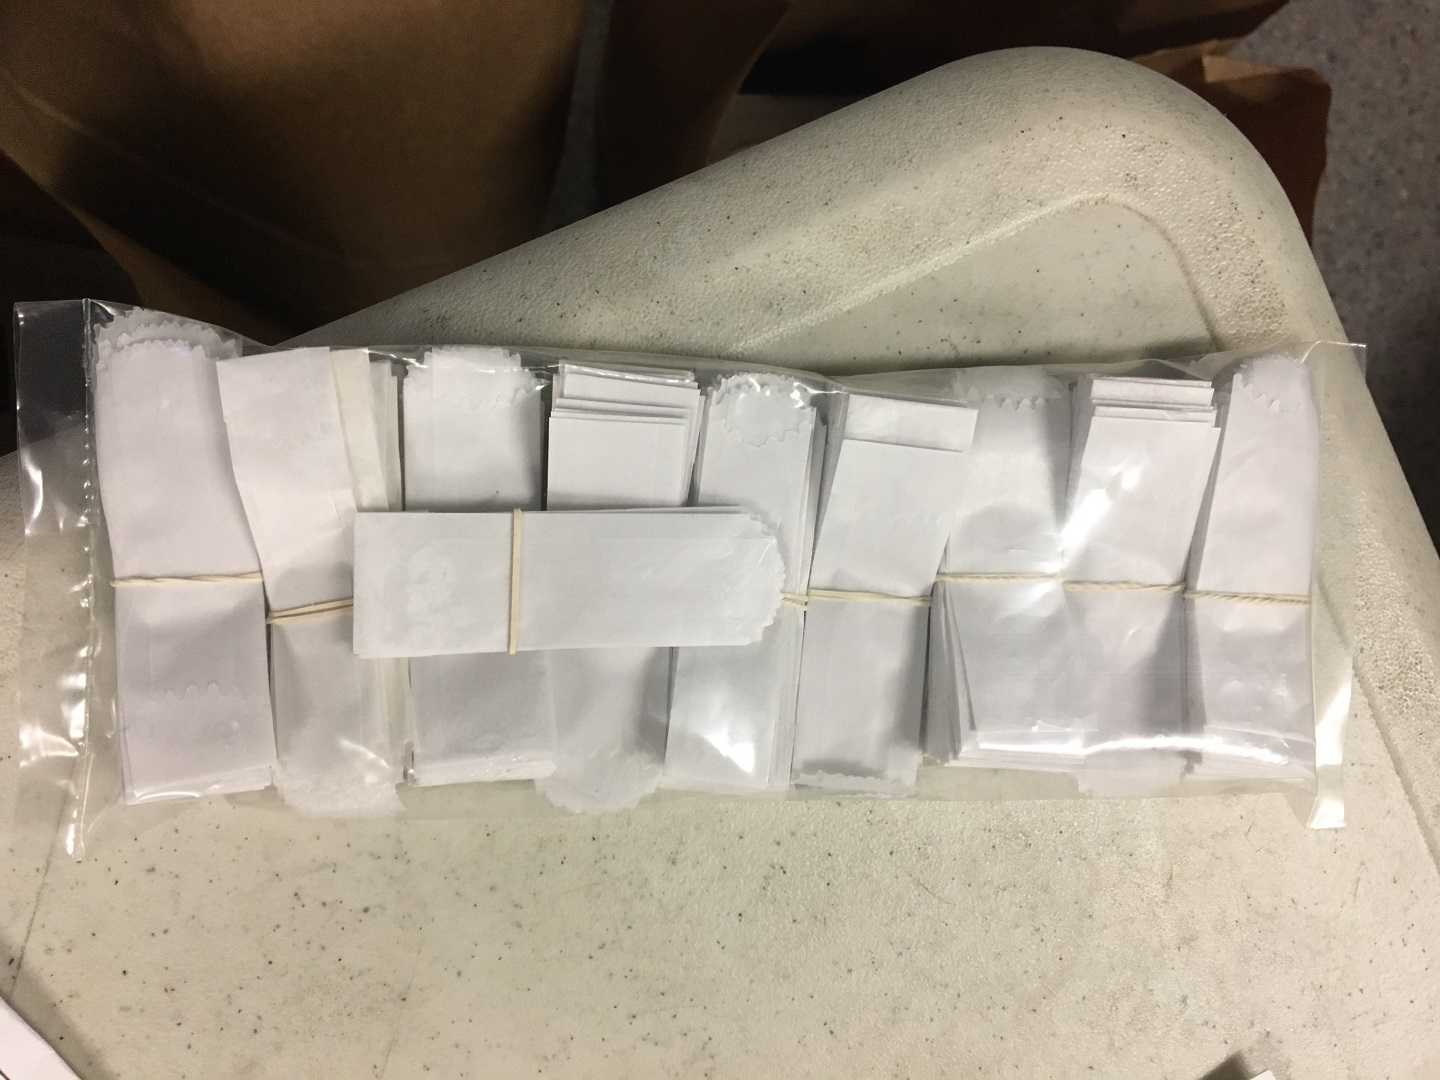 Five men arrested after over 400 bags of heroin seized in Greensburg